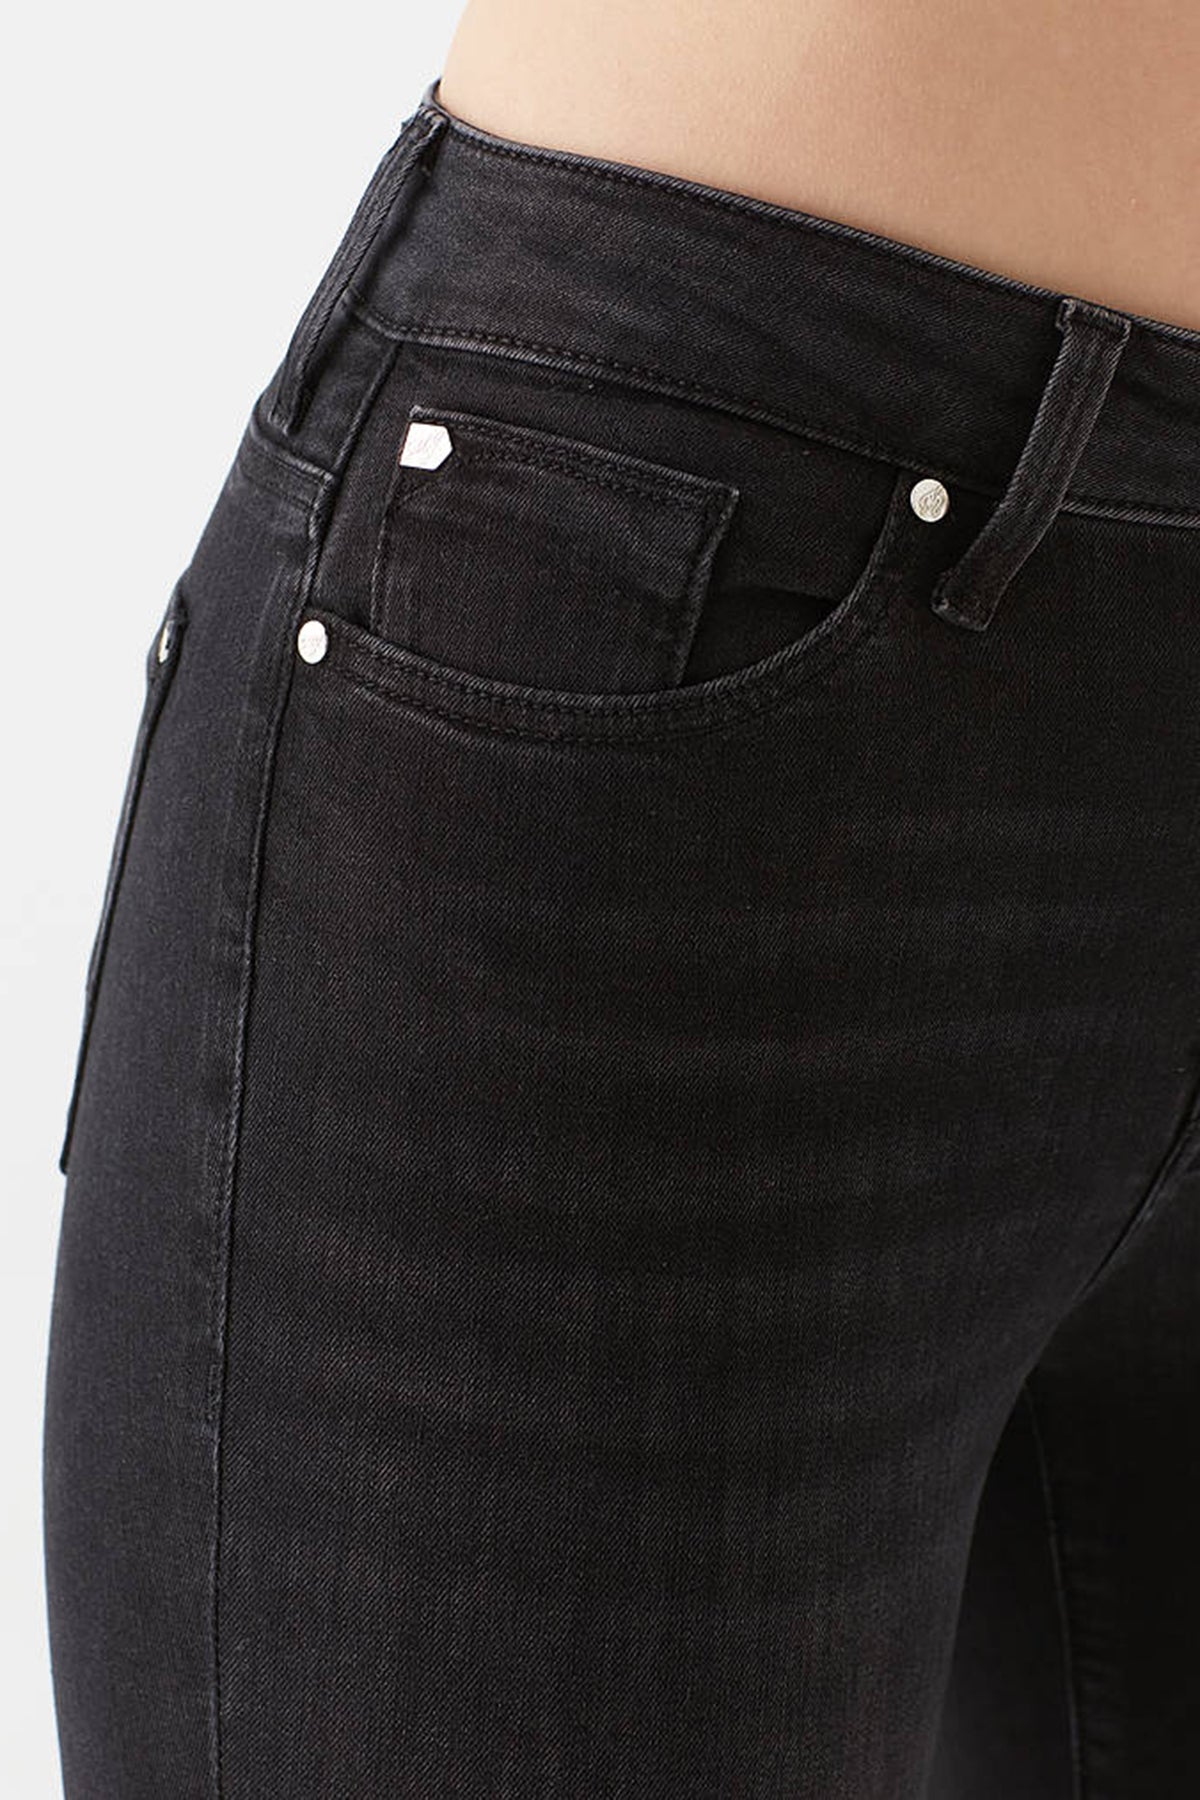 Mavi Yüksek Bel Skinny Pamuklu Tess Jeans Bayan Kot Pantolon 100328-31910 SİYAH